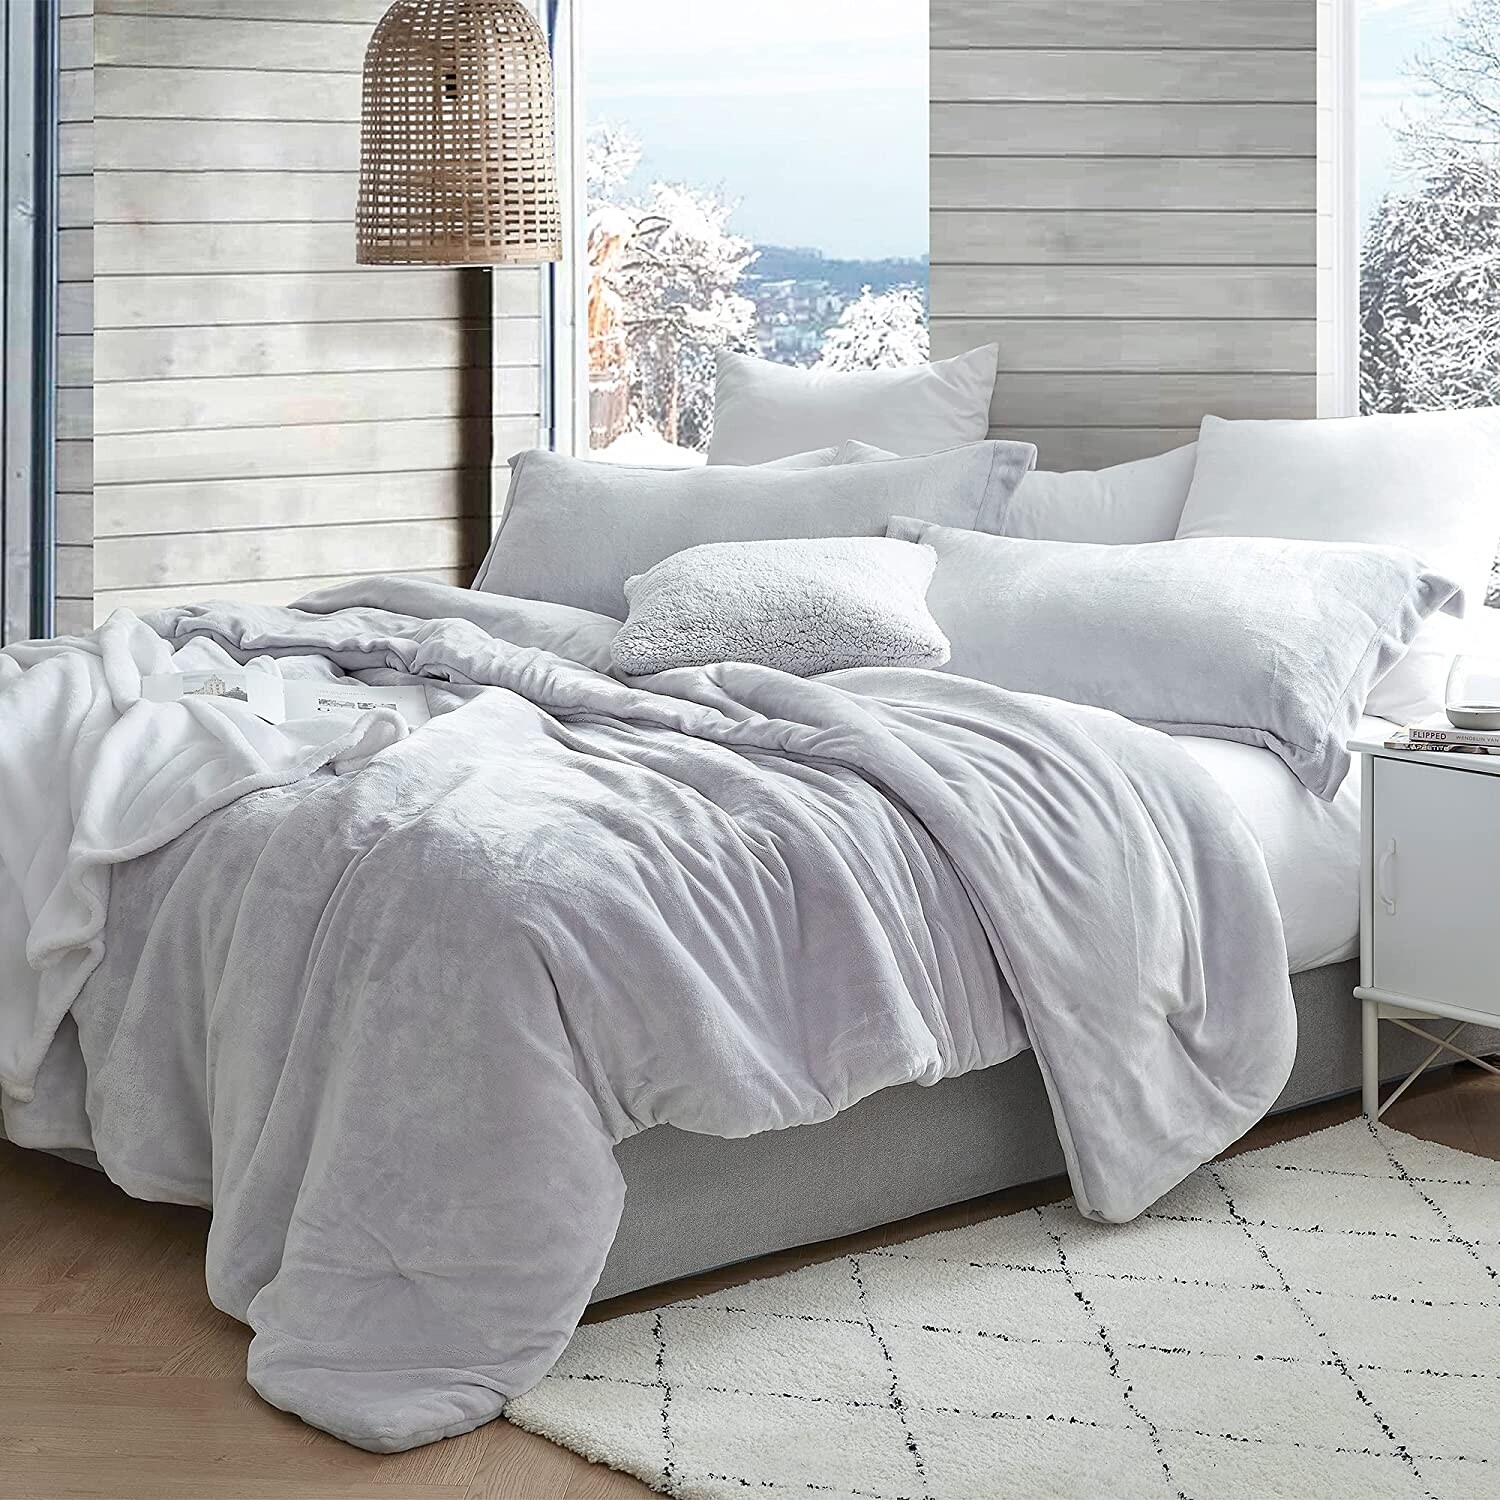 Snorze Cloud Comforter Set - Coma Inducer Oversized Bedding in True Blue - Oversized Alaskan King